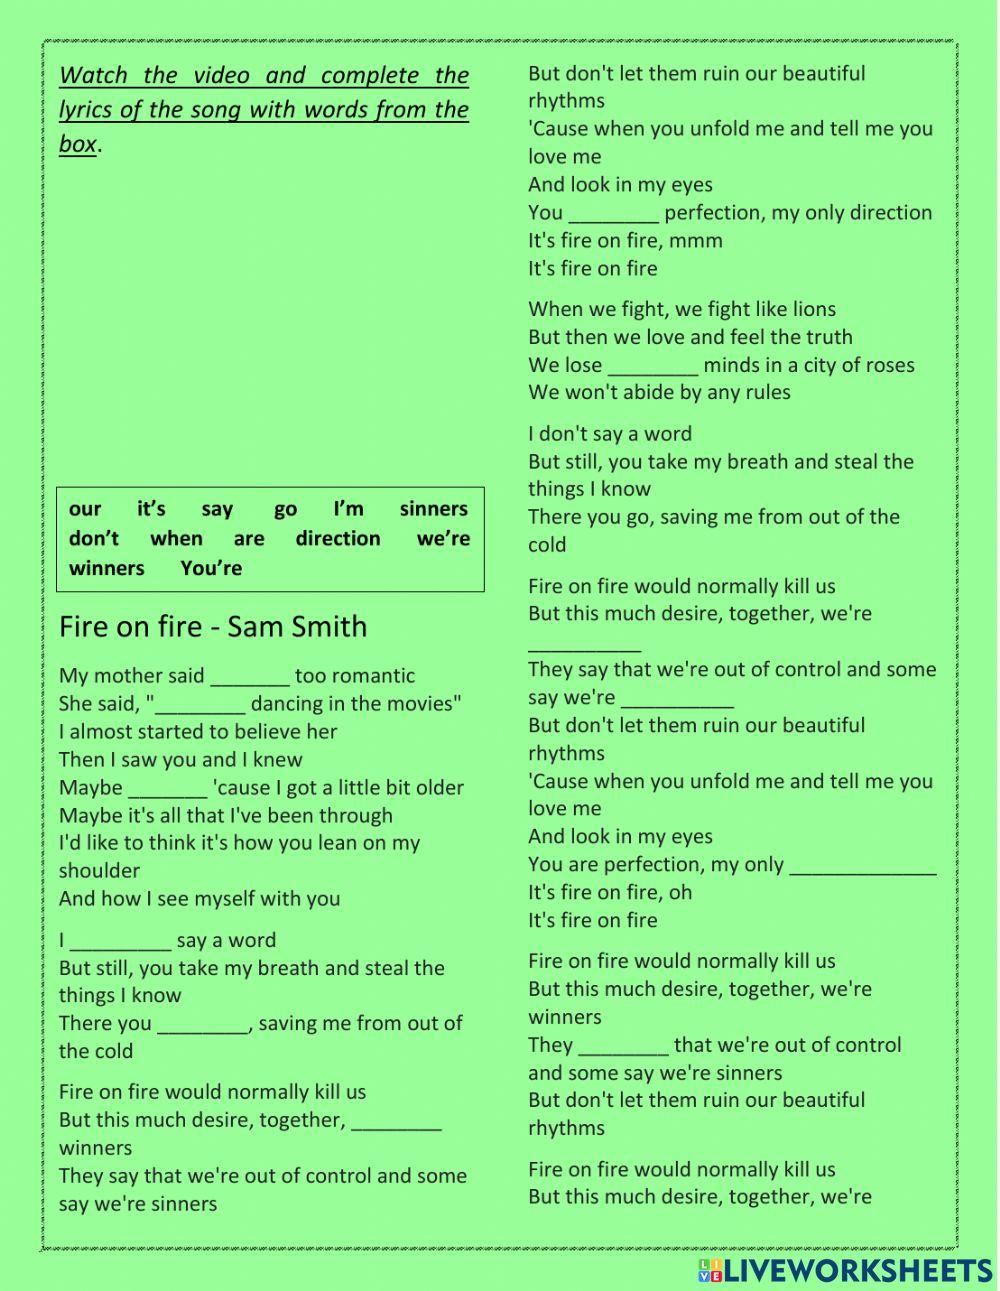 Fire on fire Sam Smith